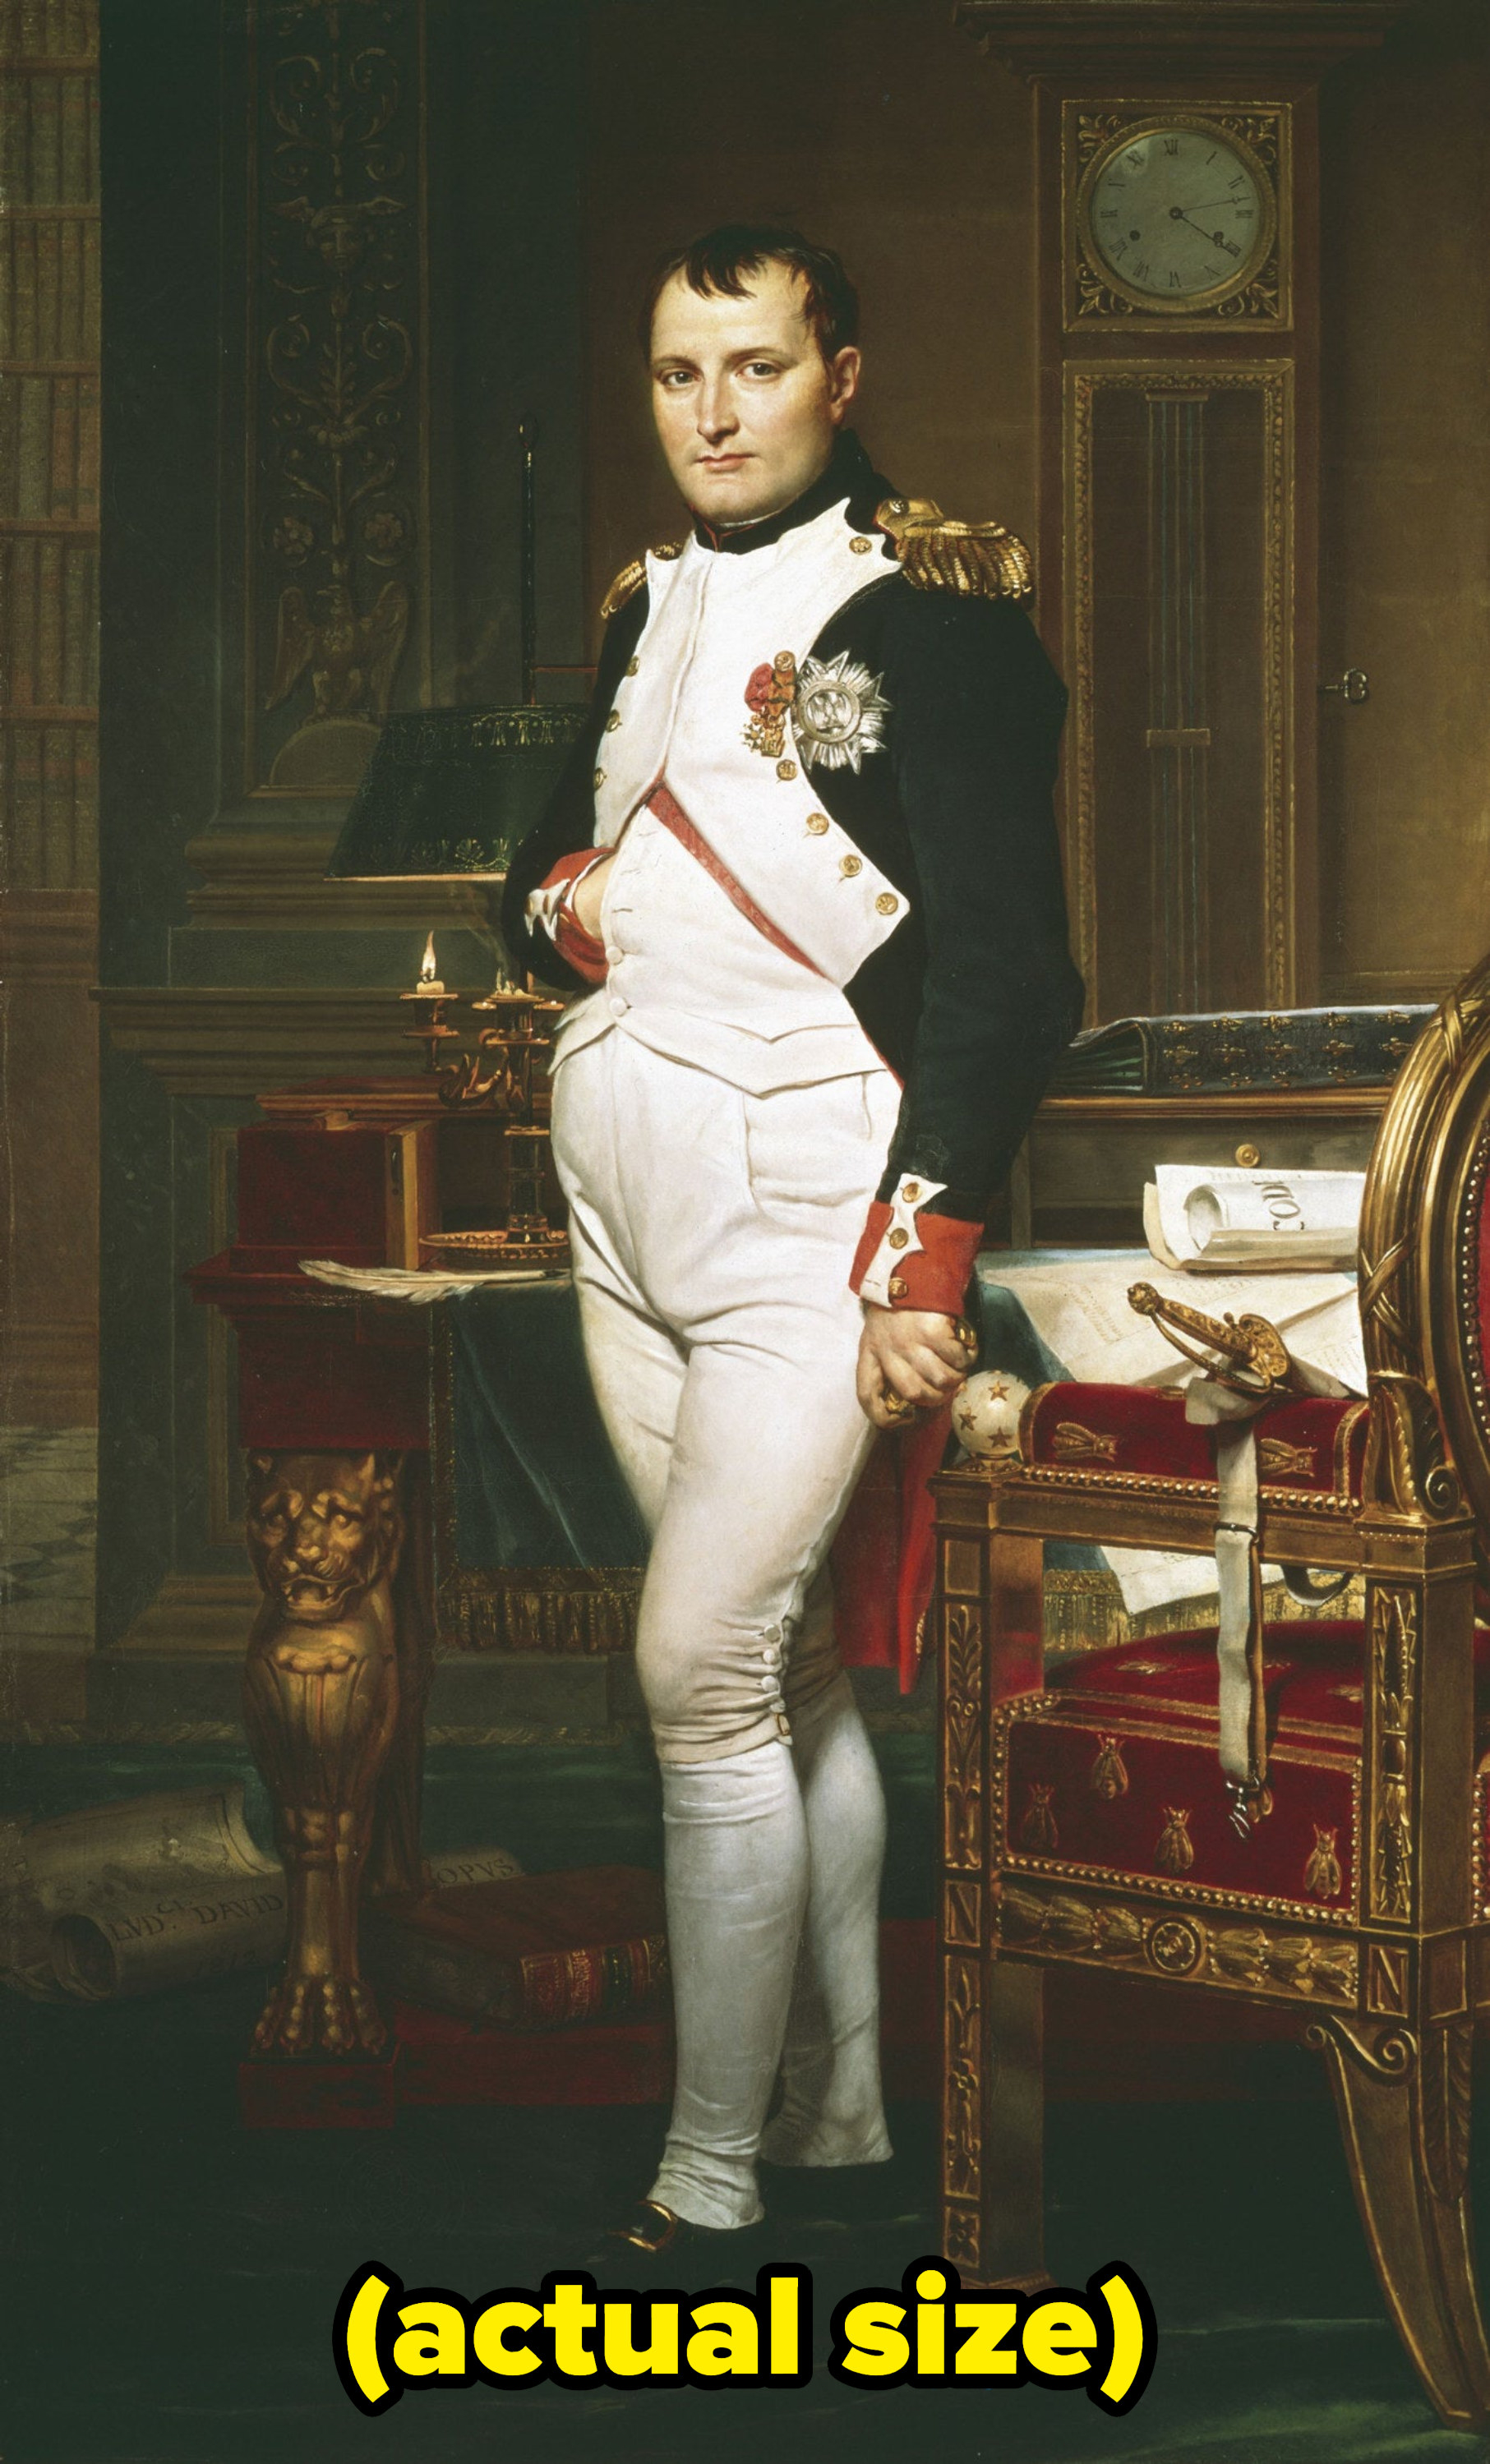 Napoleon Bonaparte, with caption: actual size